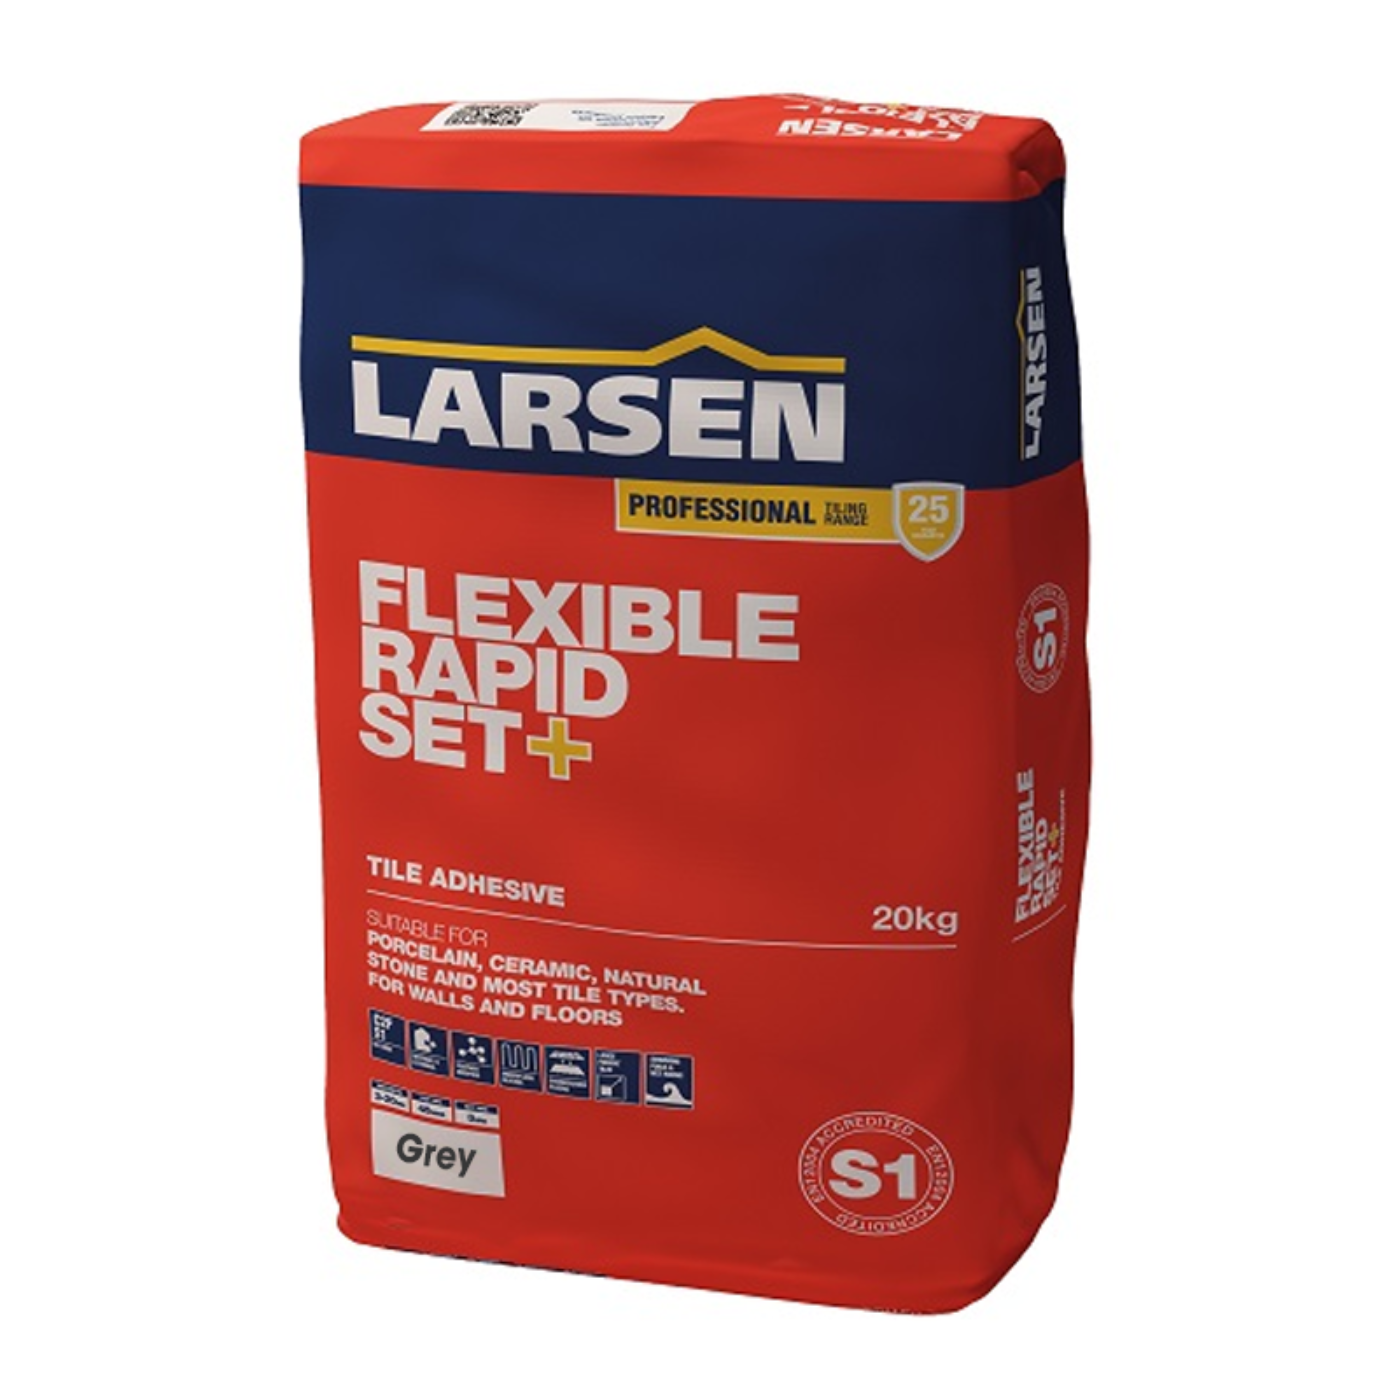 Larsen Professional Flexible Fast Set Adhesive - Grey (20kg) - Bundle Product